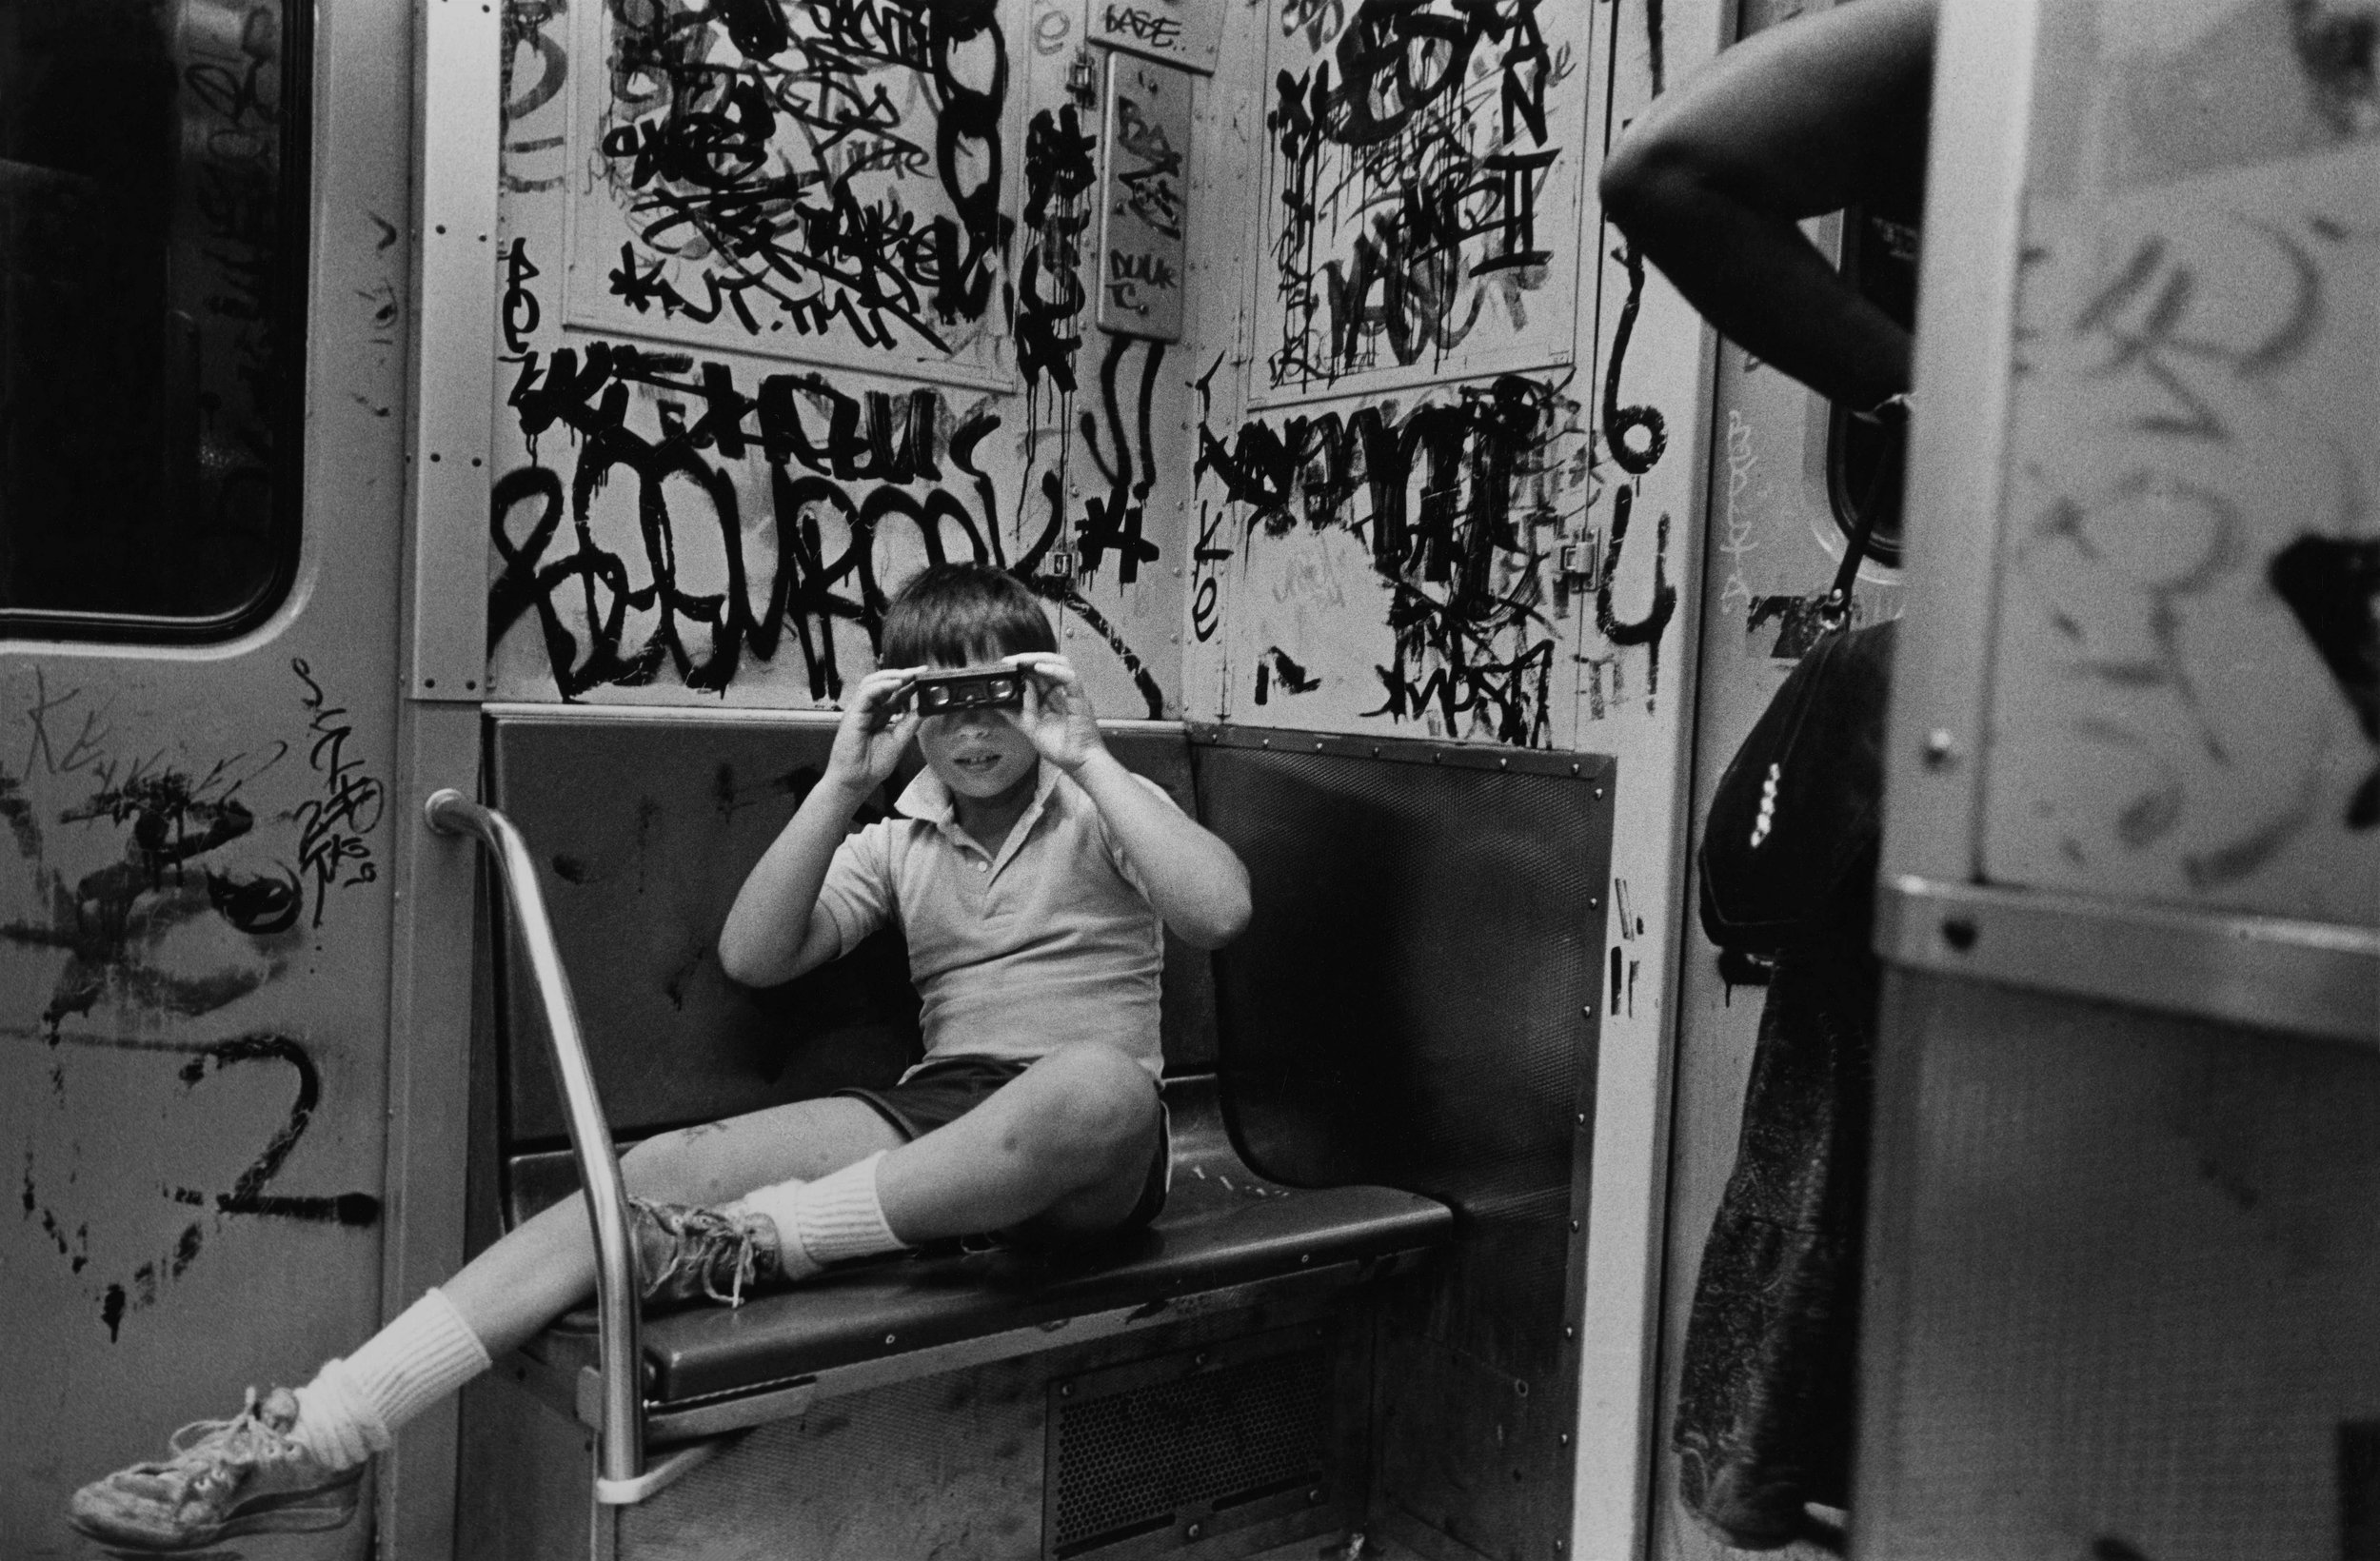 ben with opera glasses, subway, nyc, c. 1979